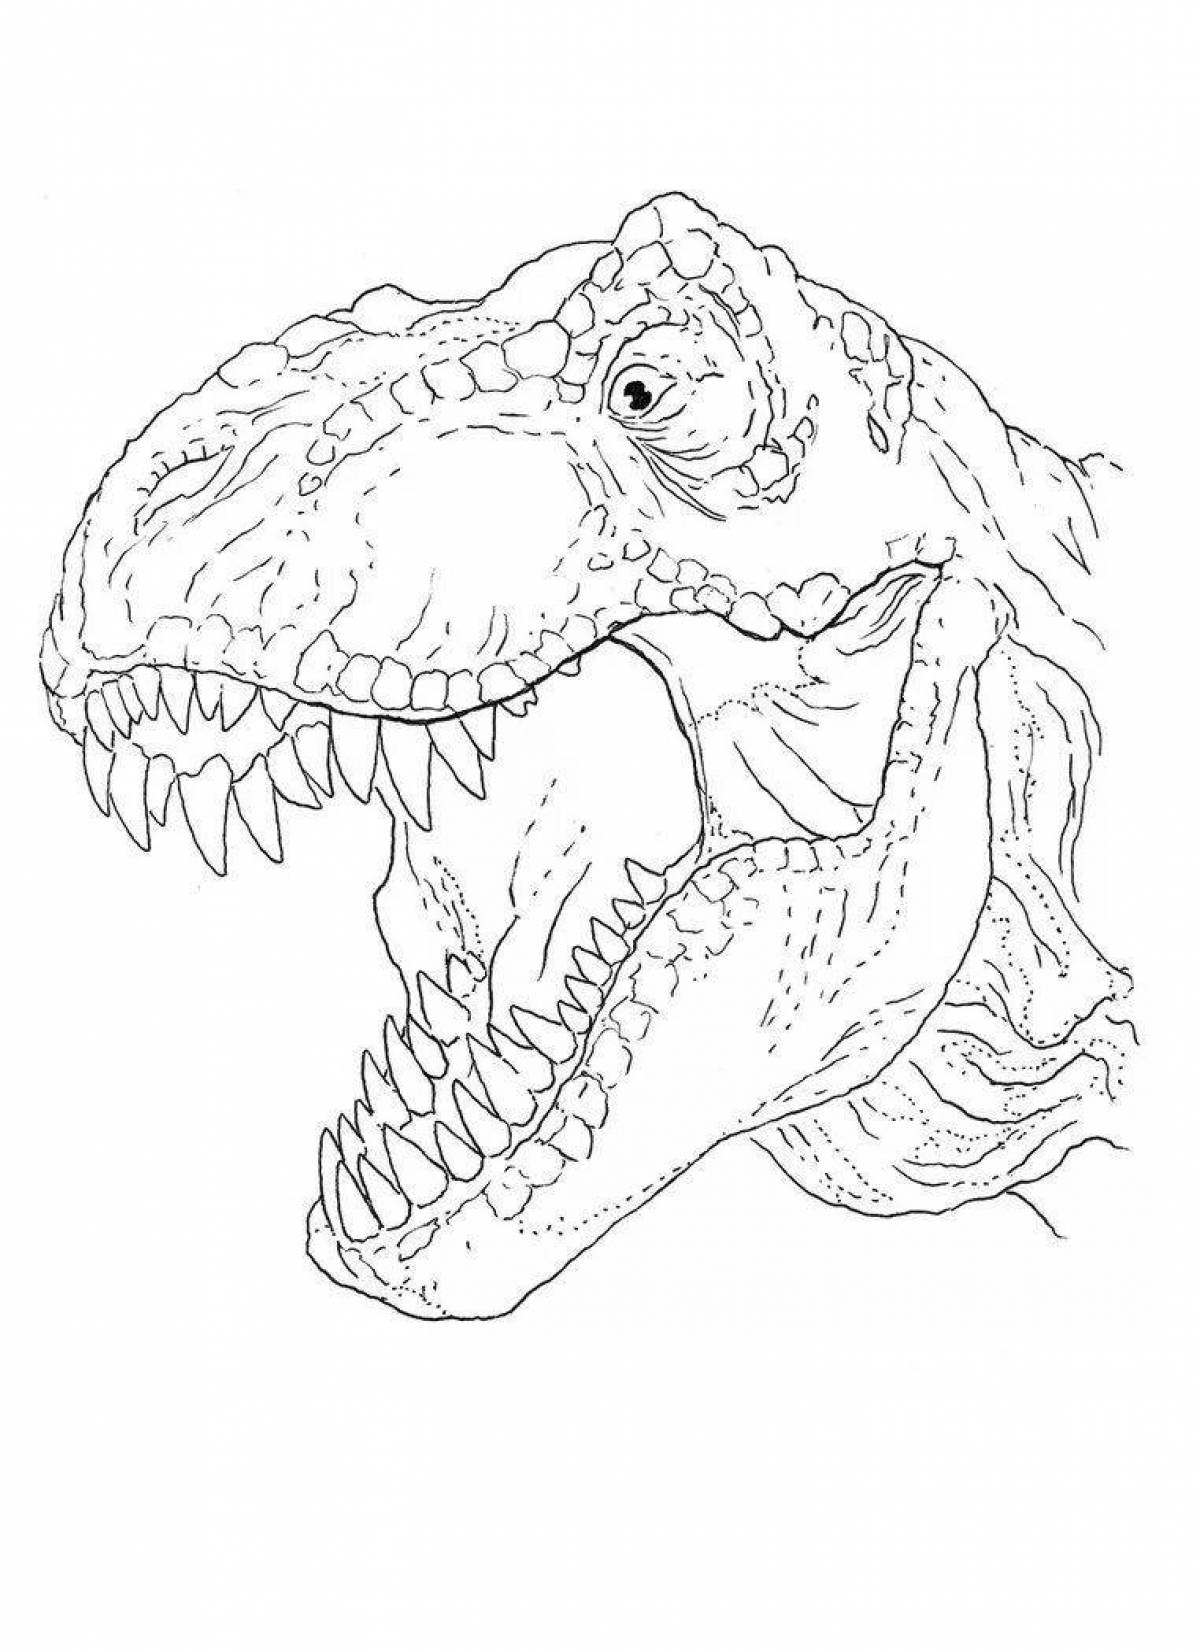 Tyrannosaurus rex fairy seal coloring page